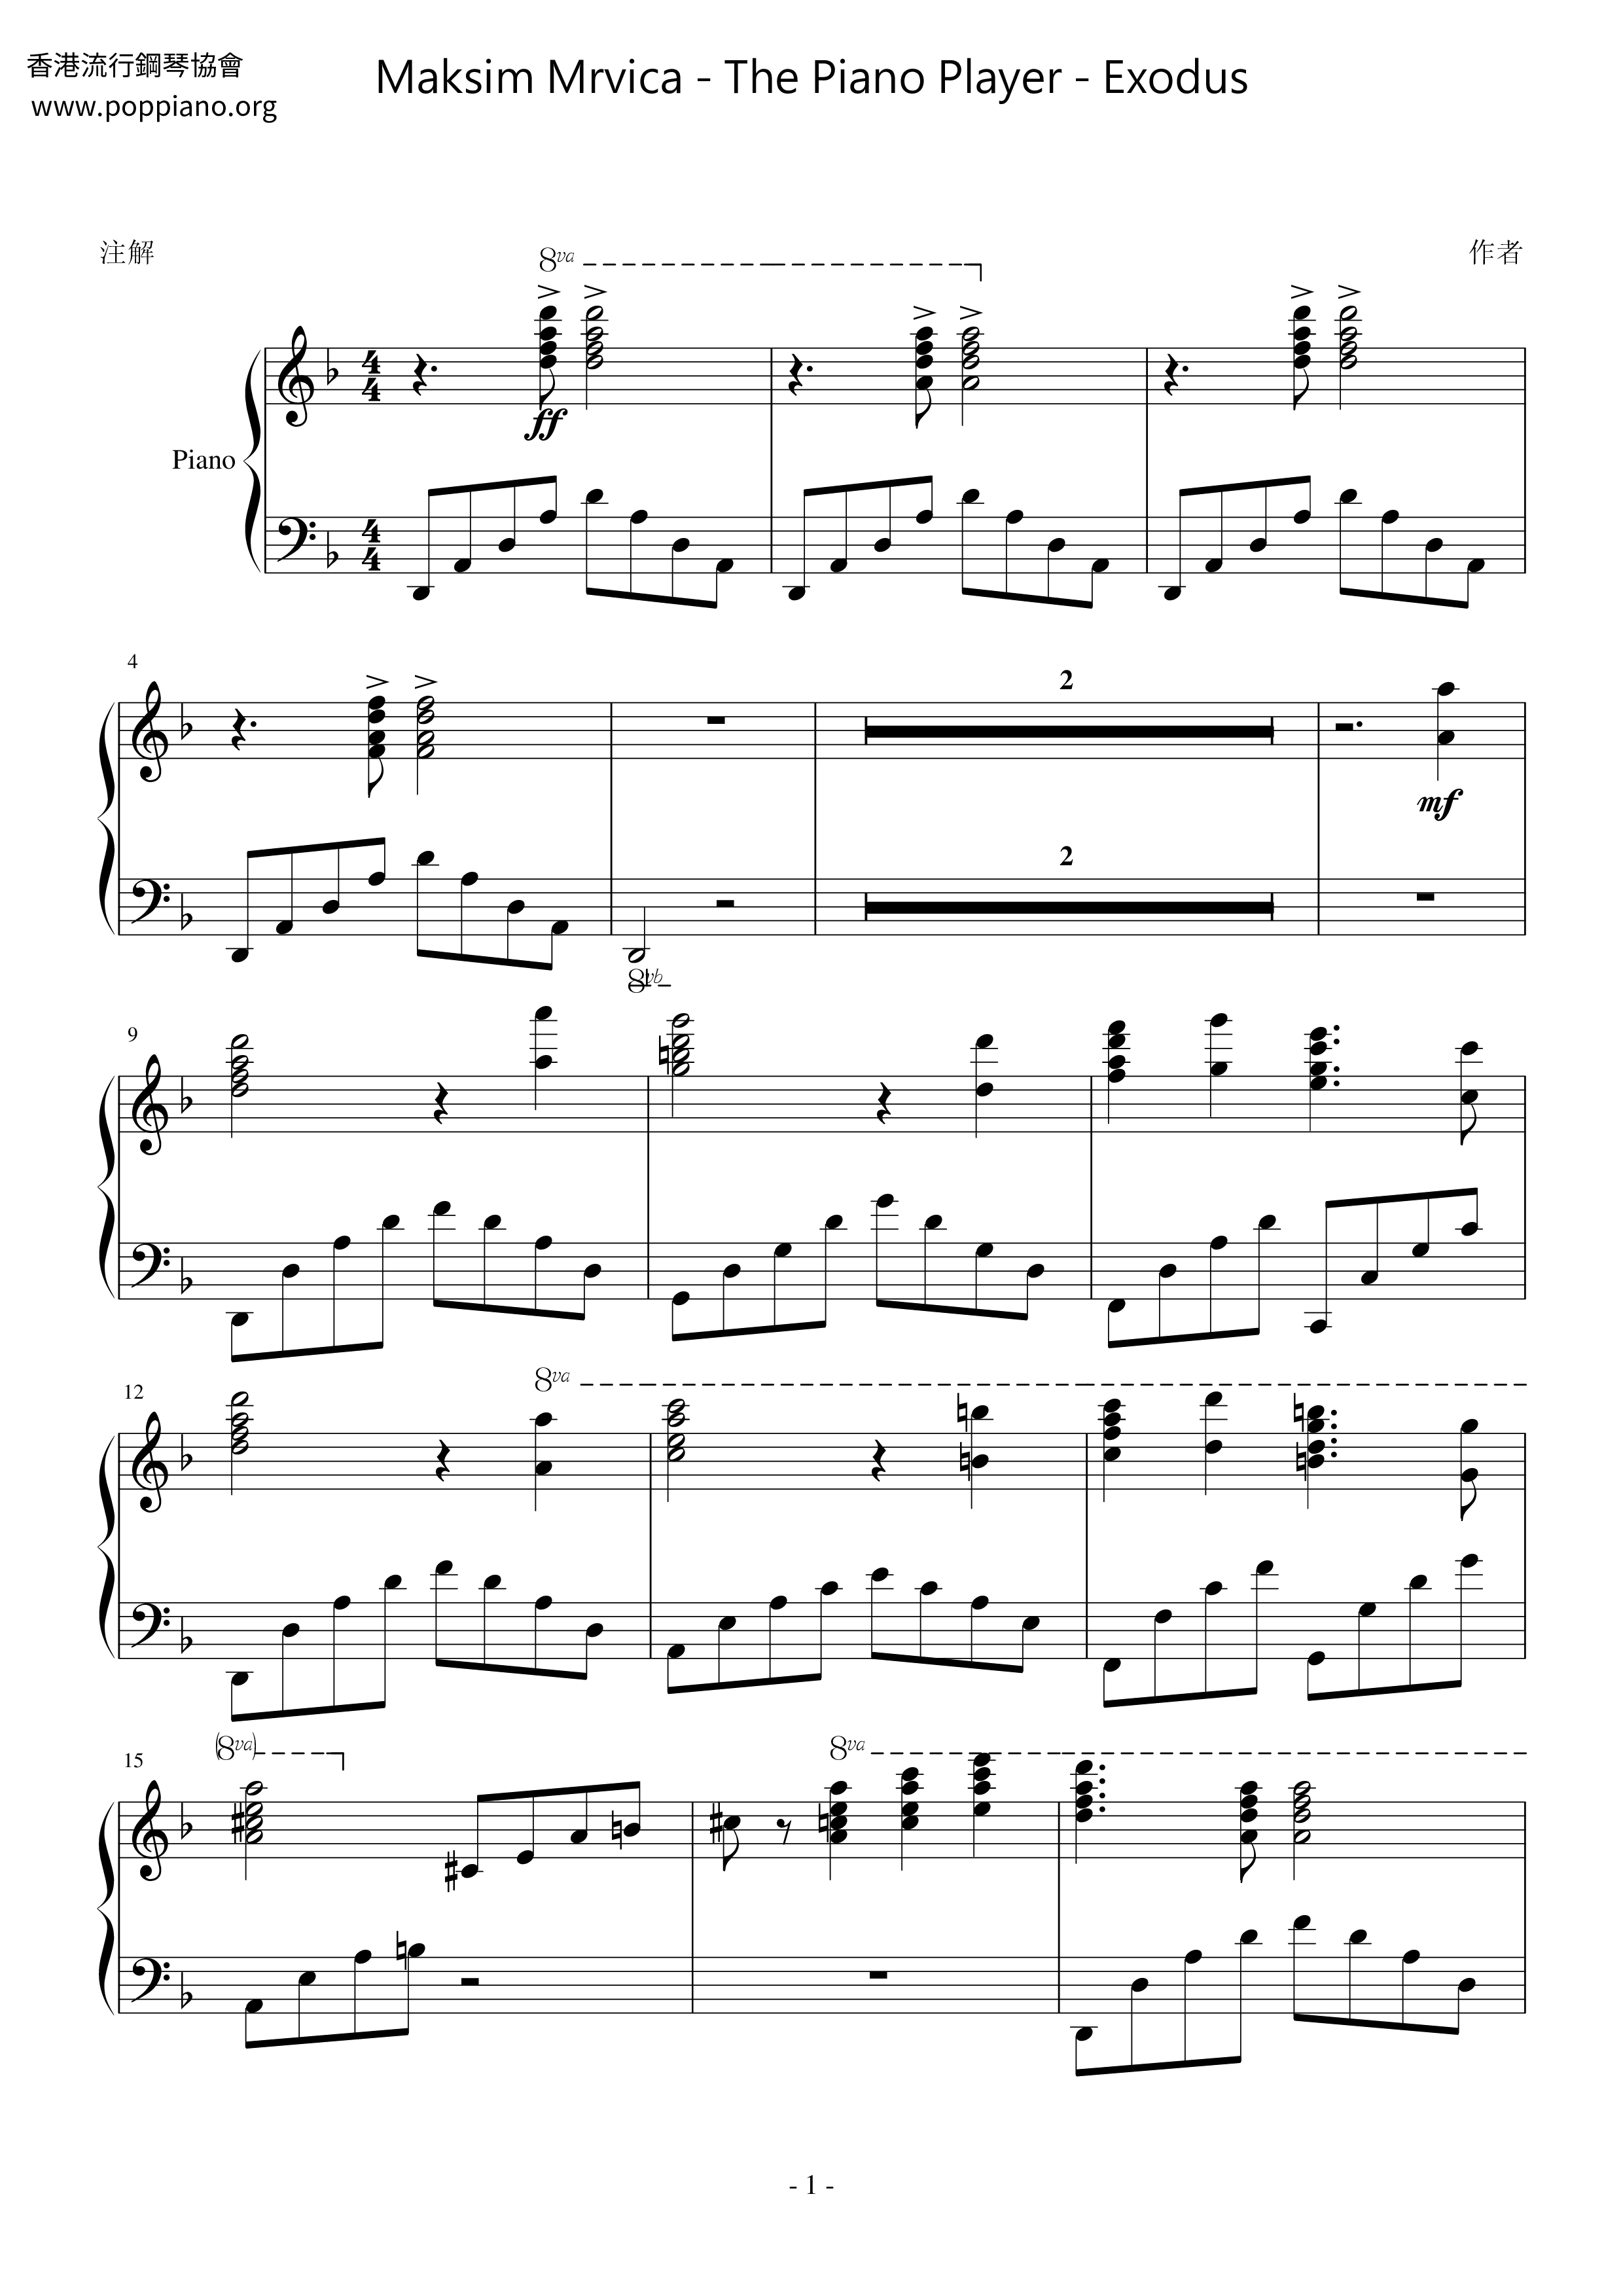 The Piano Player - Exodus琴譜